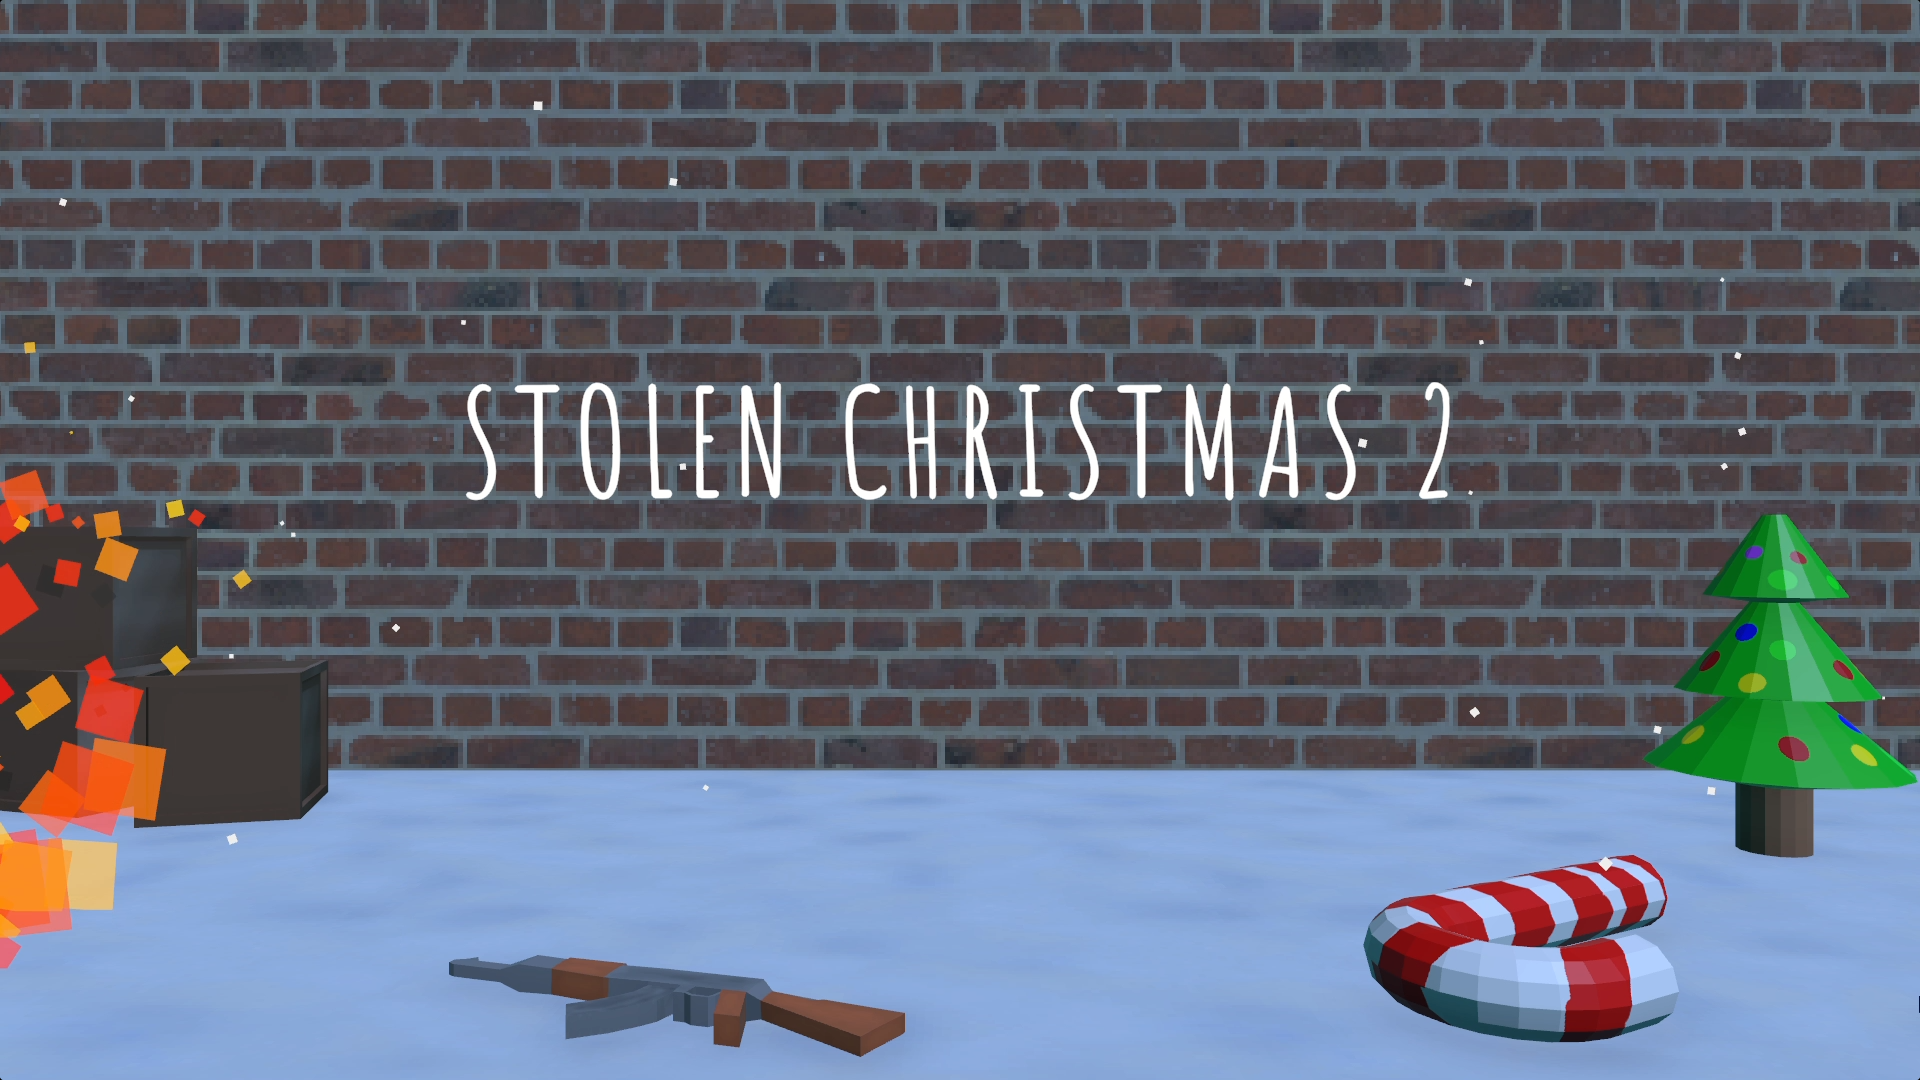 Stolen Christmas 2